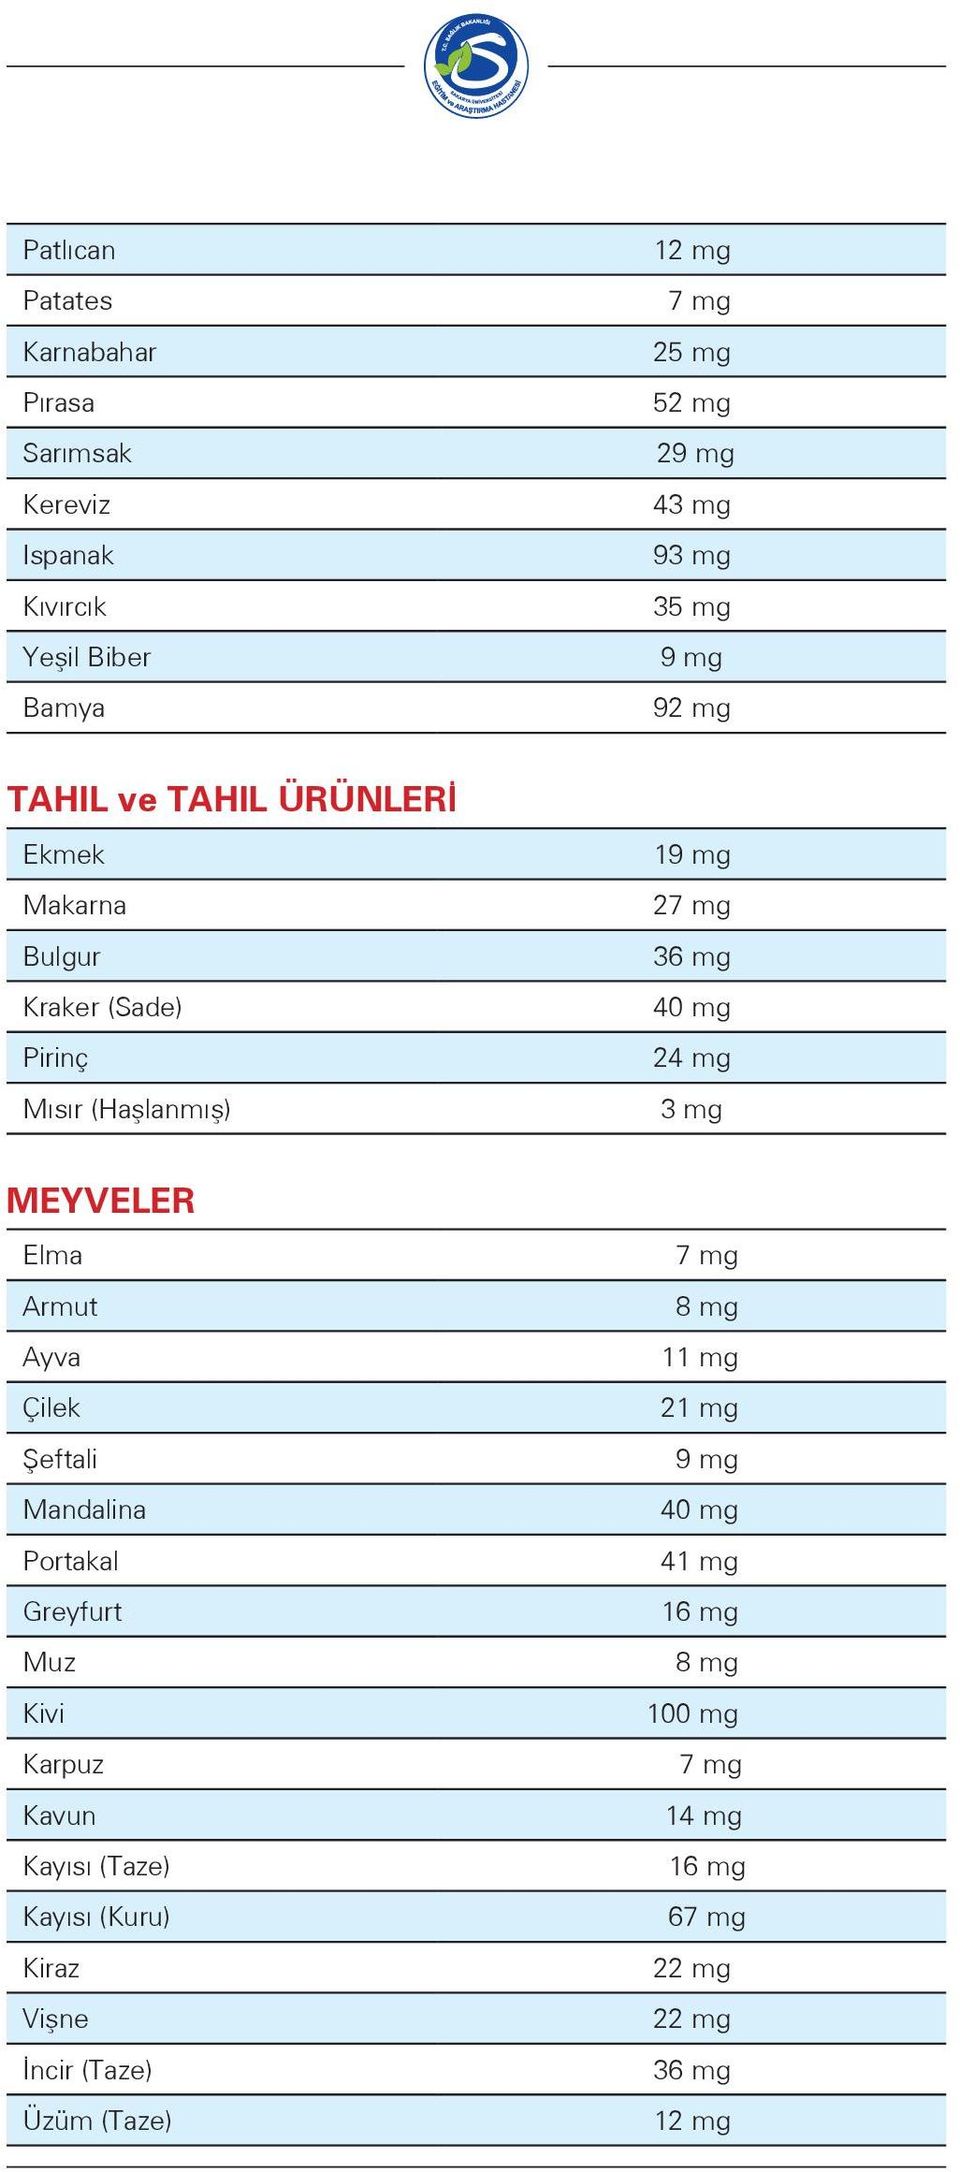 mg MEYVELER Elma 7 mg Armut 8 mg Ayva 11 mg Çilek 21 mg Şeftali 9 mg Mandalina 40 mg Portakal 41 mg Greyfurt 16 mg Muz 8 mg Kivi